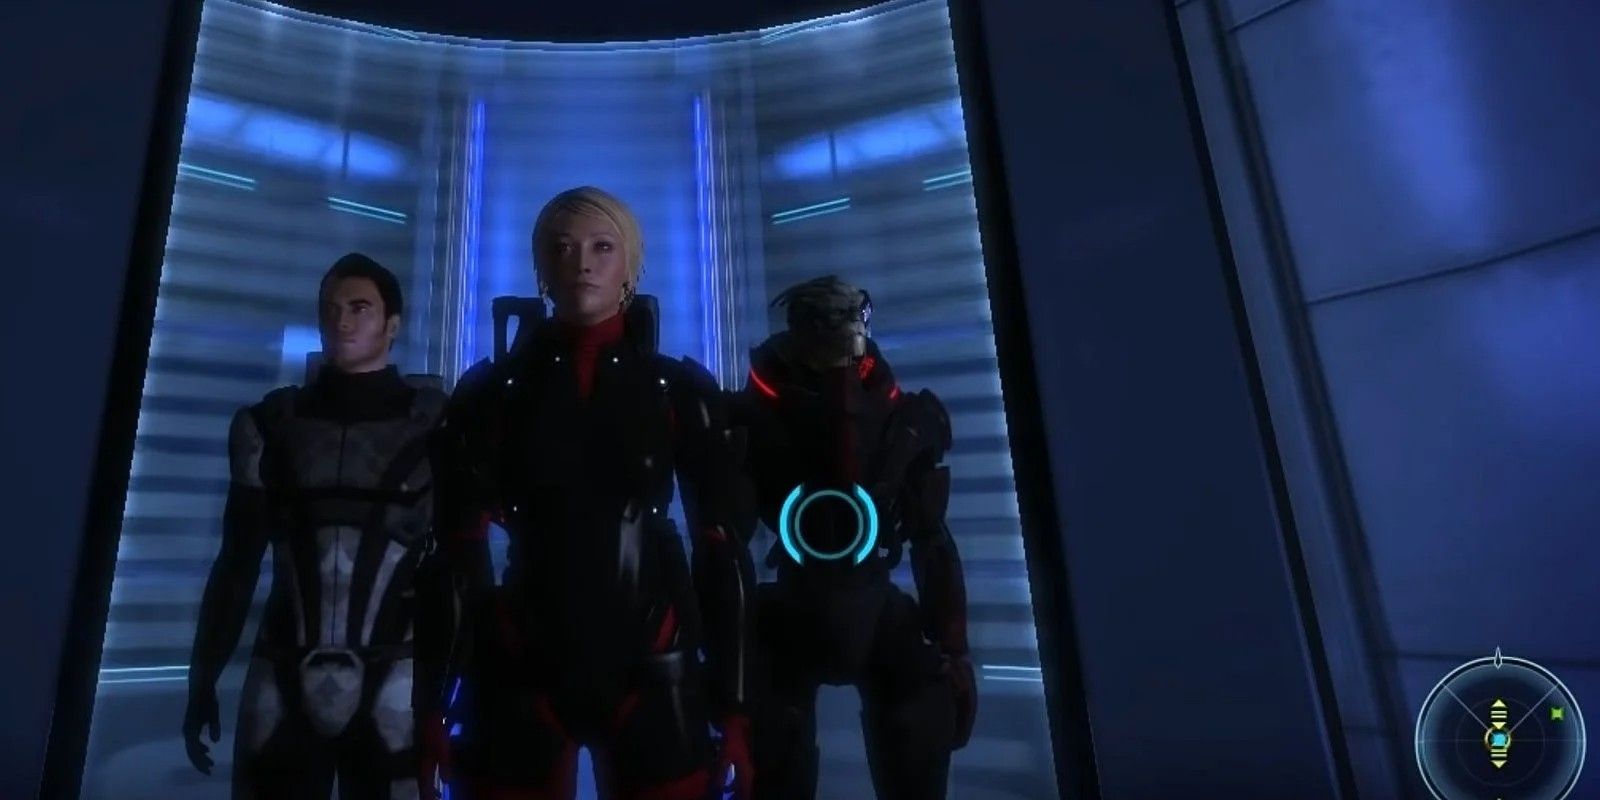 Kaidan, Shepard, and Garrus ride an elevator in the Citadel in Mass Effect